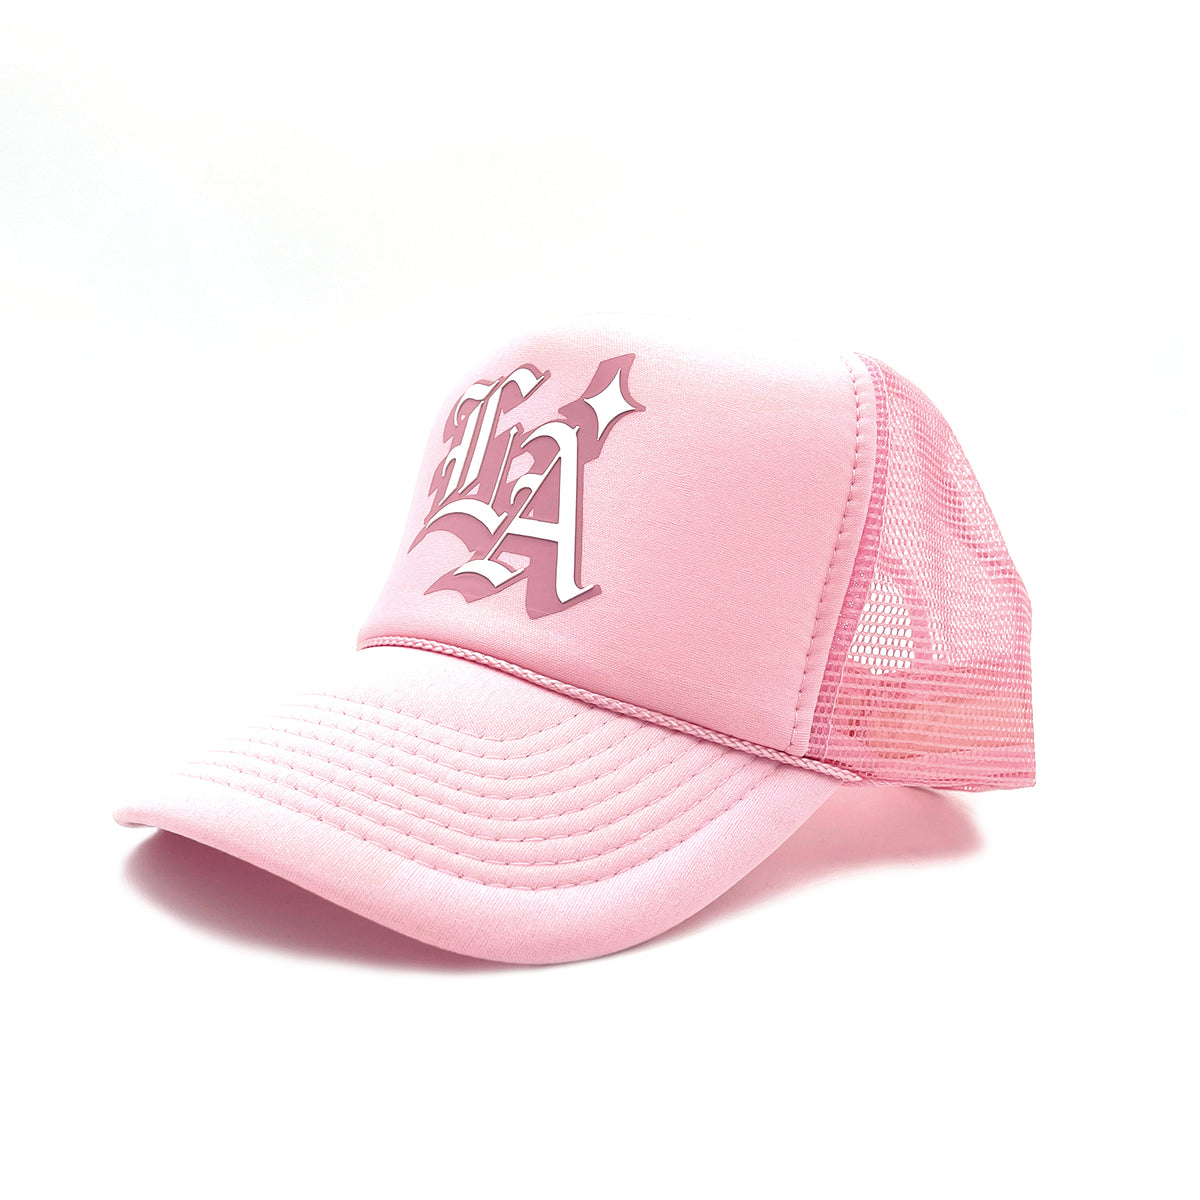 LA Dodgers Baby Pink Jersey